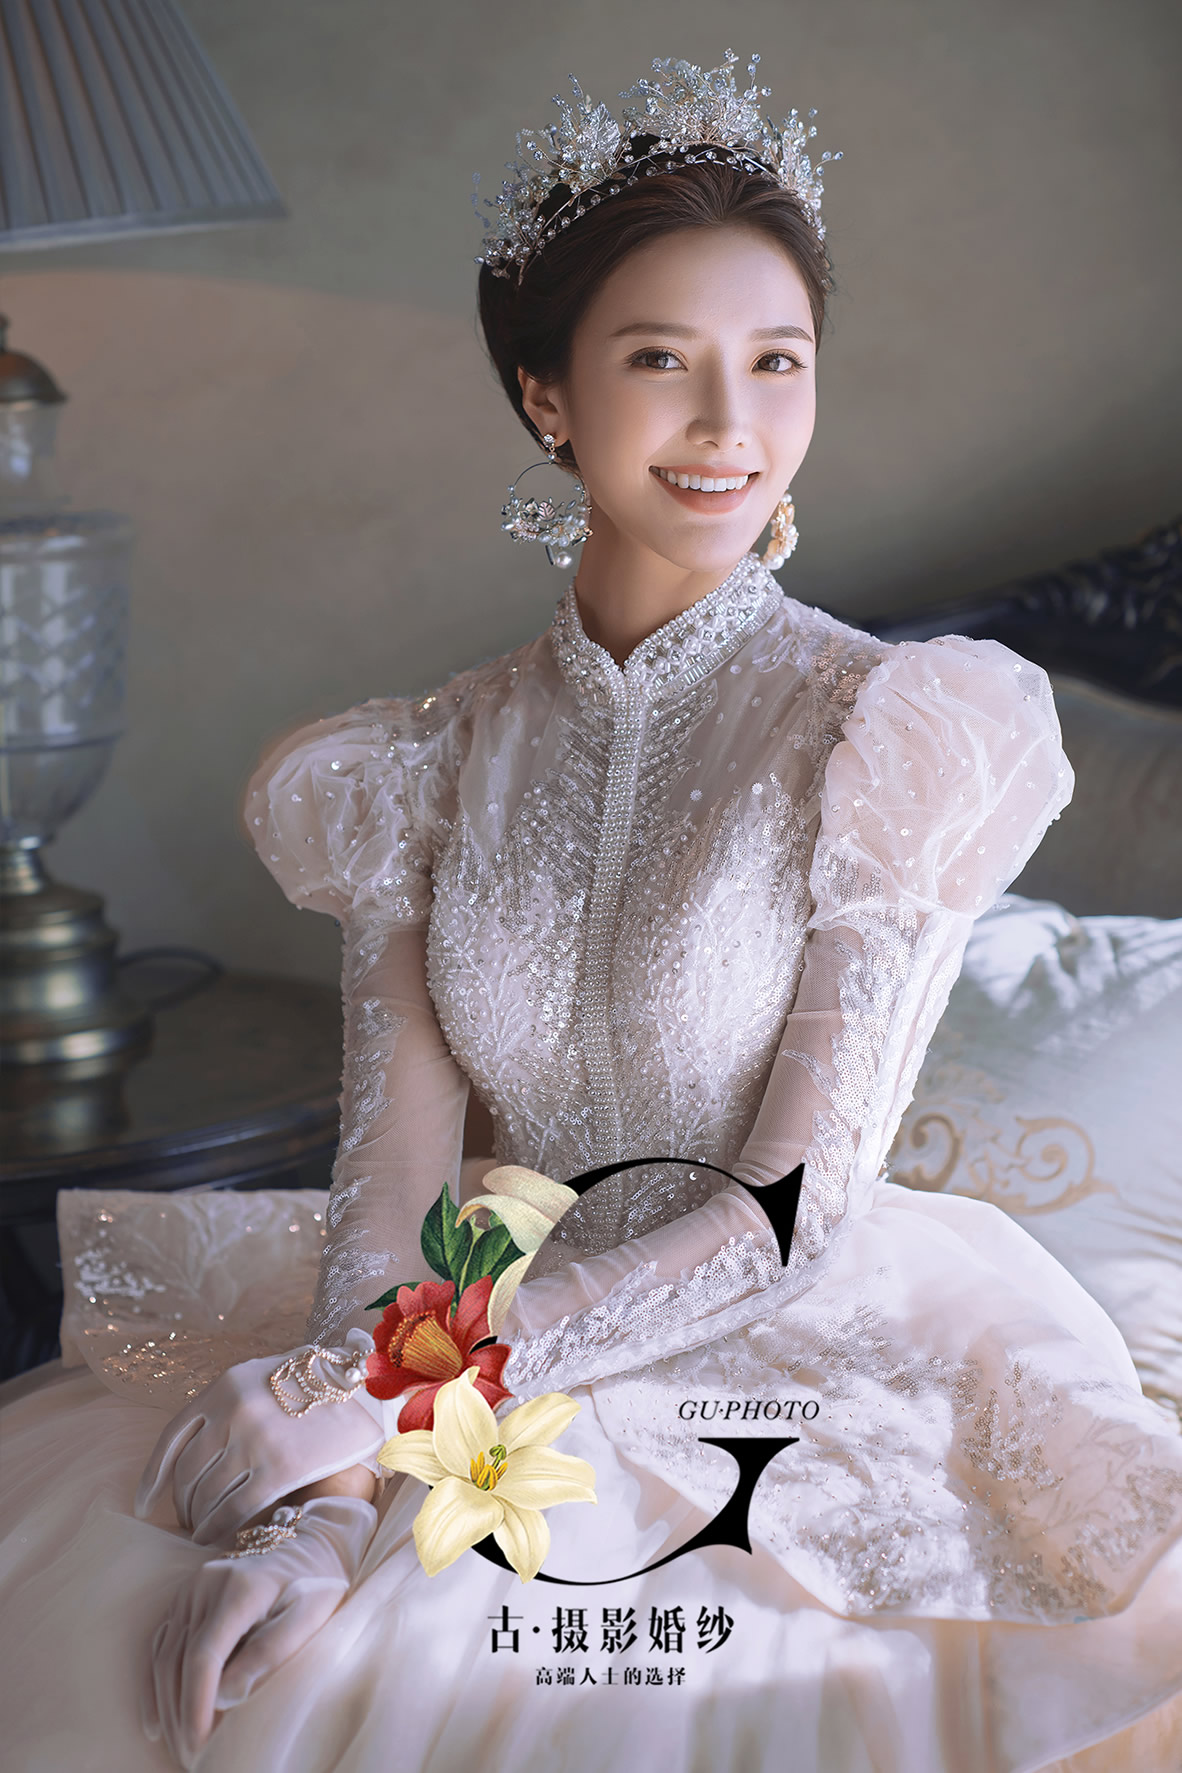 MISS DAISY - 明星范 - 广州婚纱摄影-广州古摄影官网